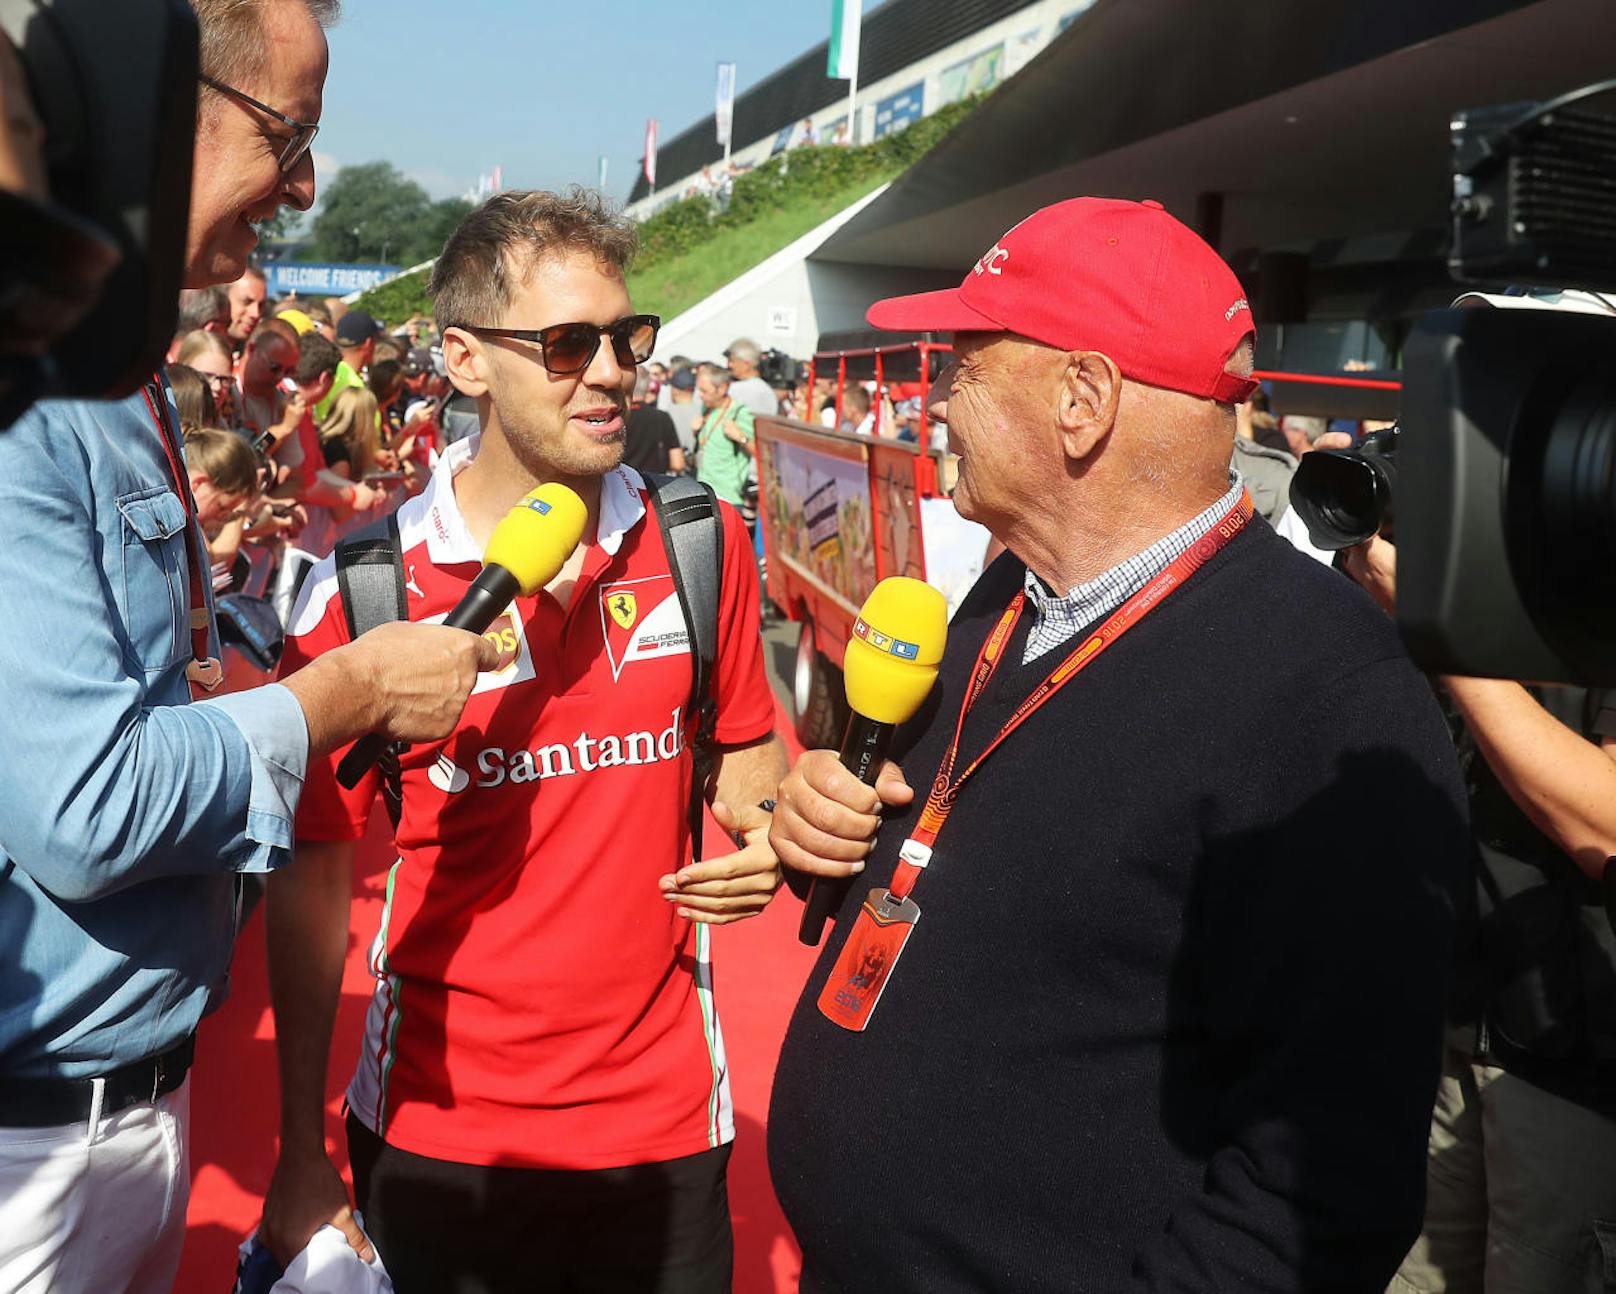 Beim Fernsehsender RTL war Lauda 21 Jahre lang als Experte tätig. Im November 2017 gab er seinen TV-Rücktritt bekannt. Hier interviewte er Sebastian Vettel.